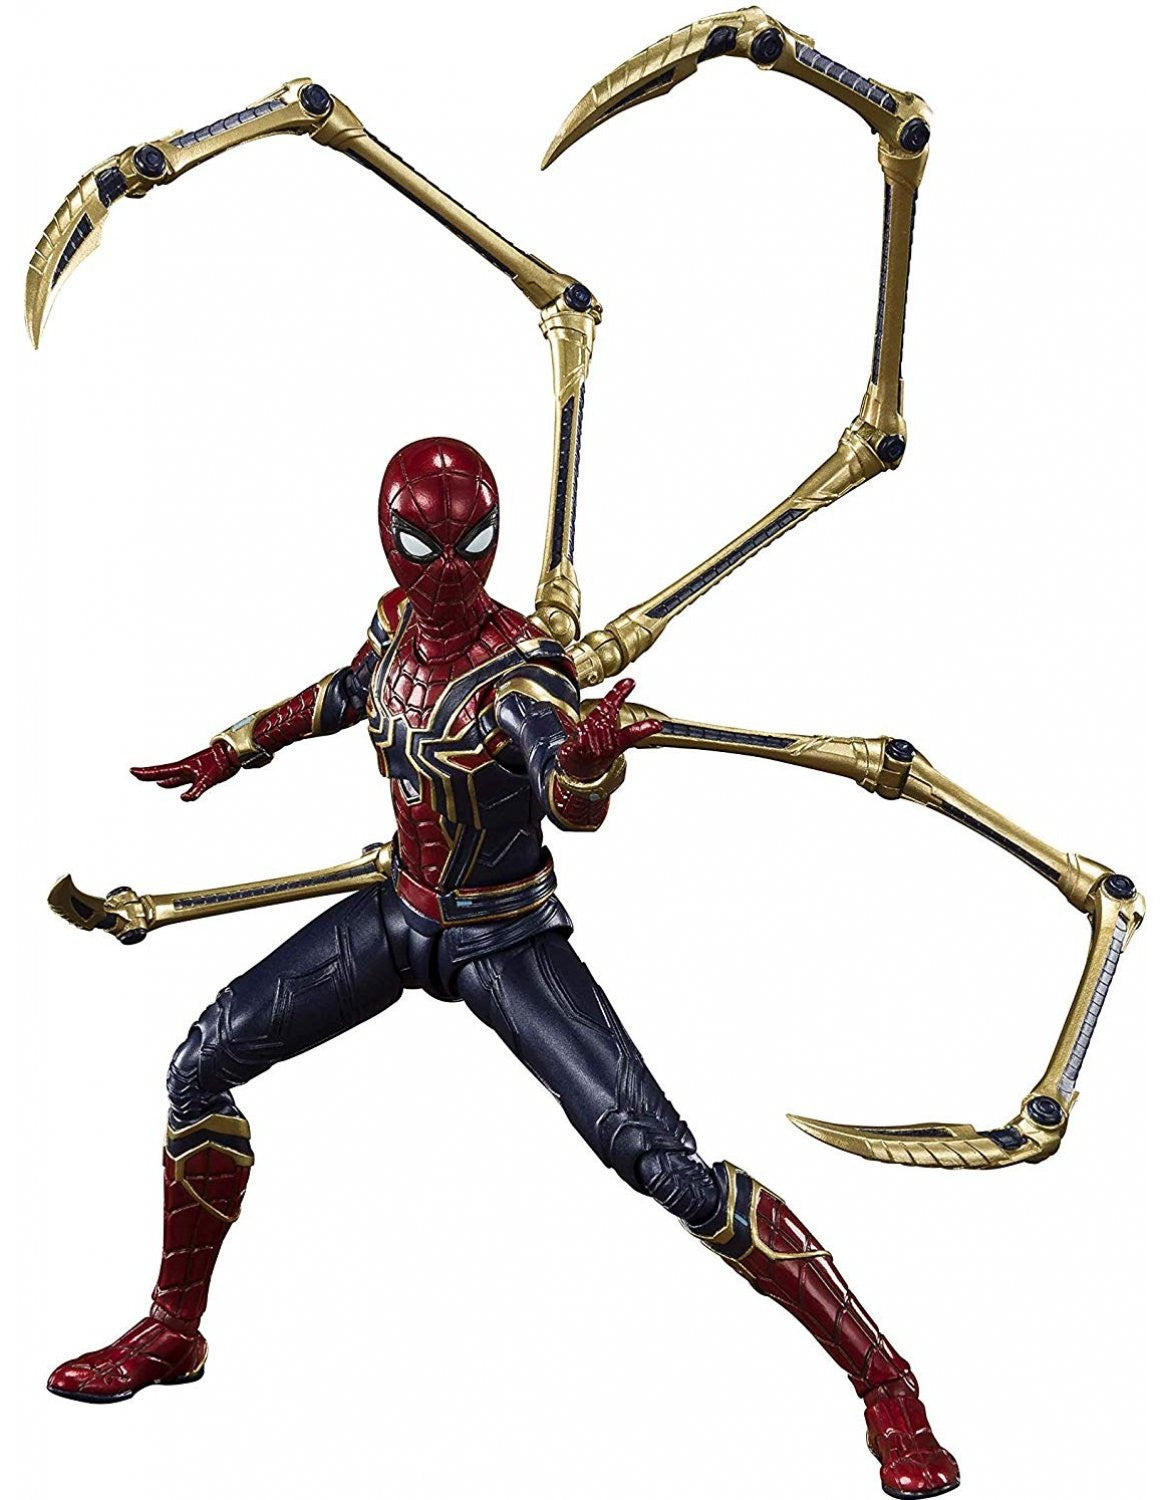 Avengers Endgame: Iron Spider - Final Battle Edition